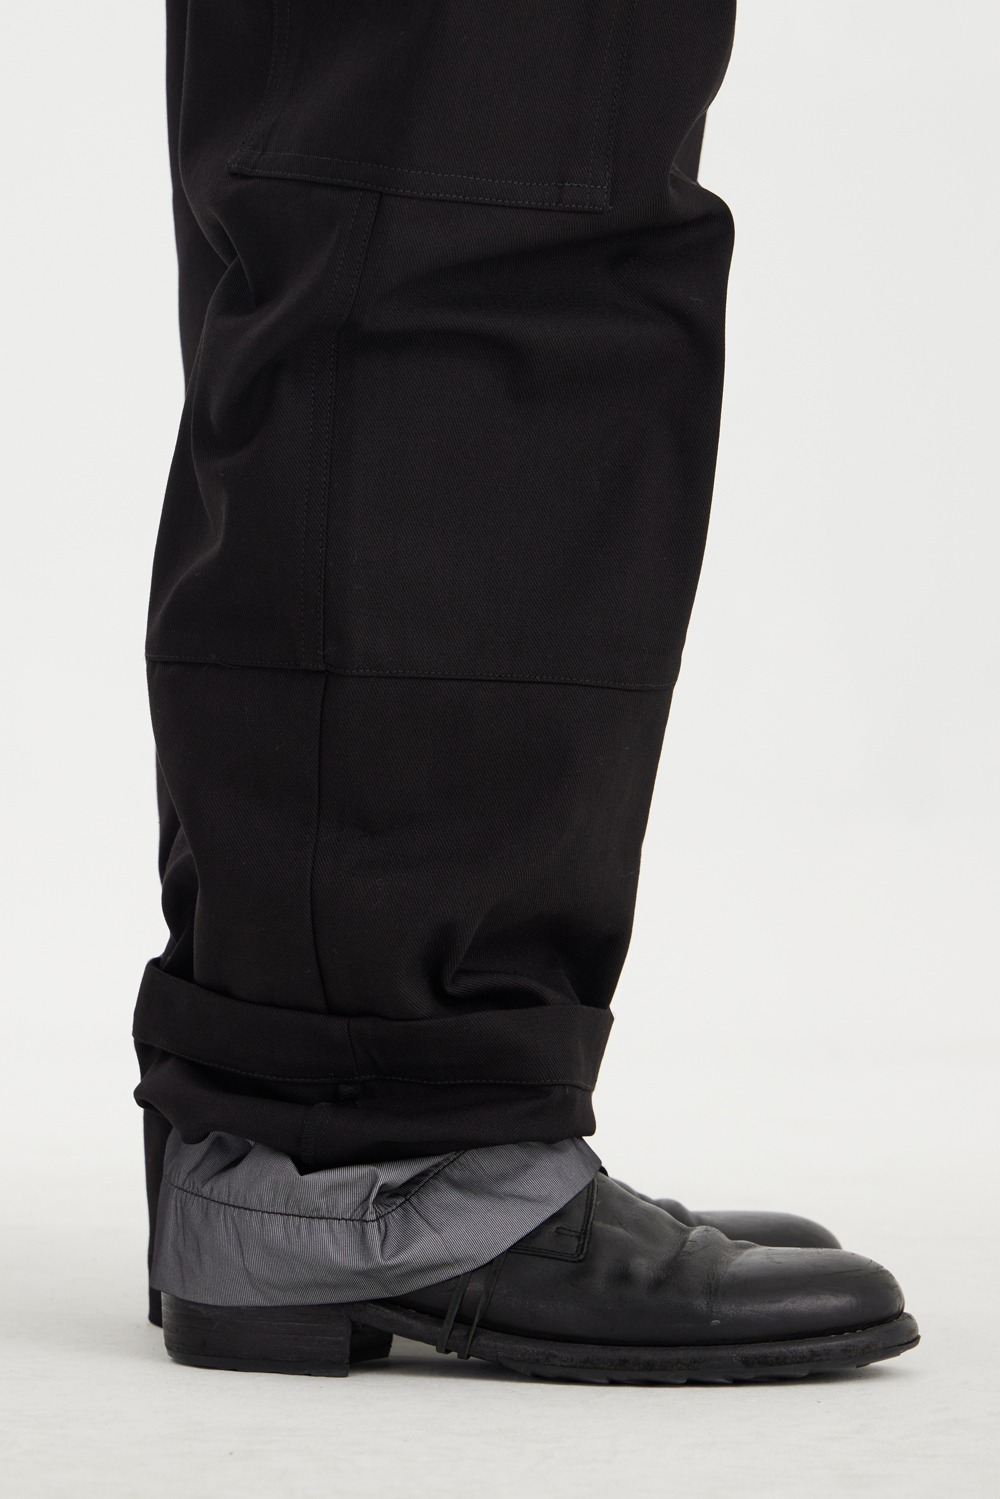 Klopman Shank Structured Pants - Black